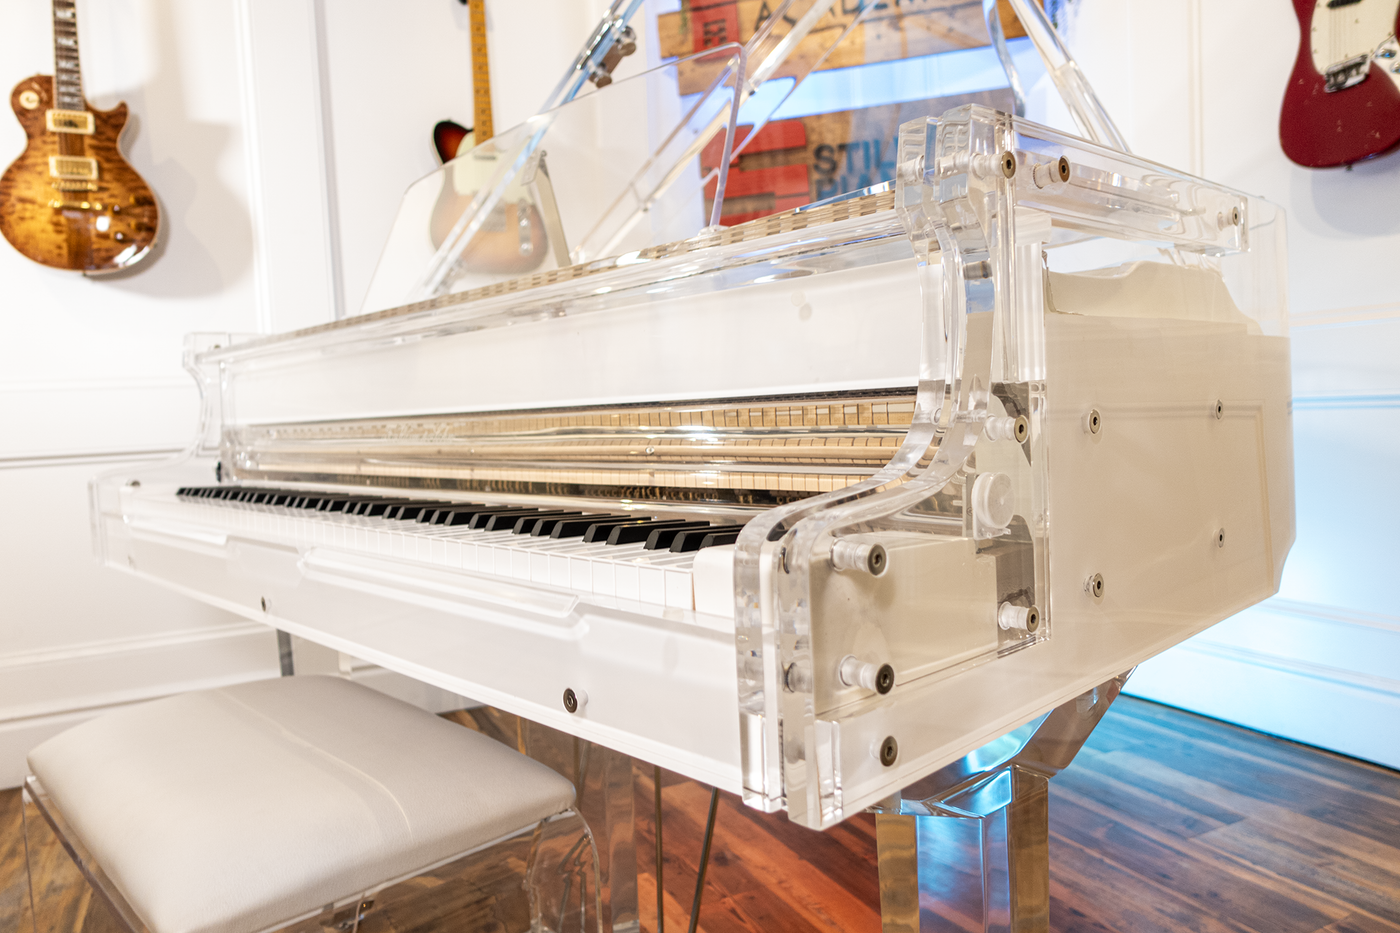 F. Kaim & Sohn HG-168A Baby Grand Piano